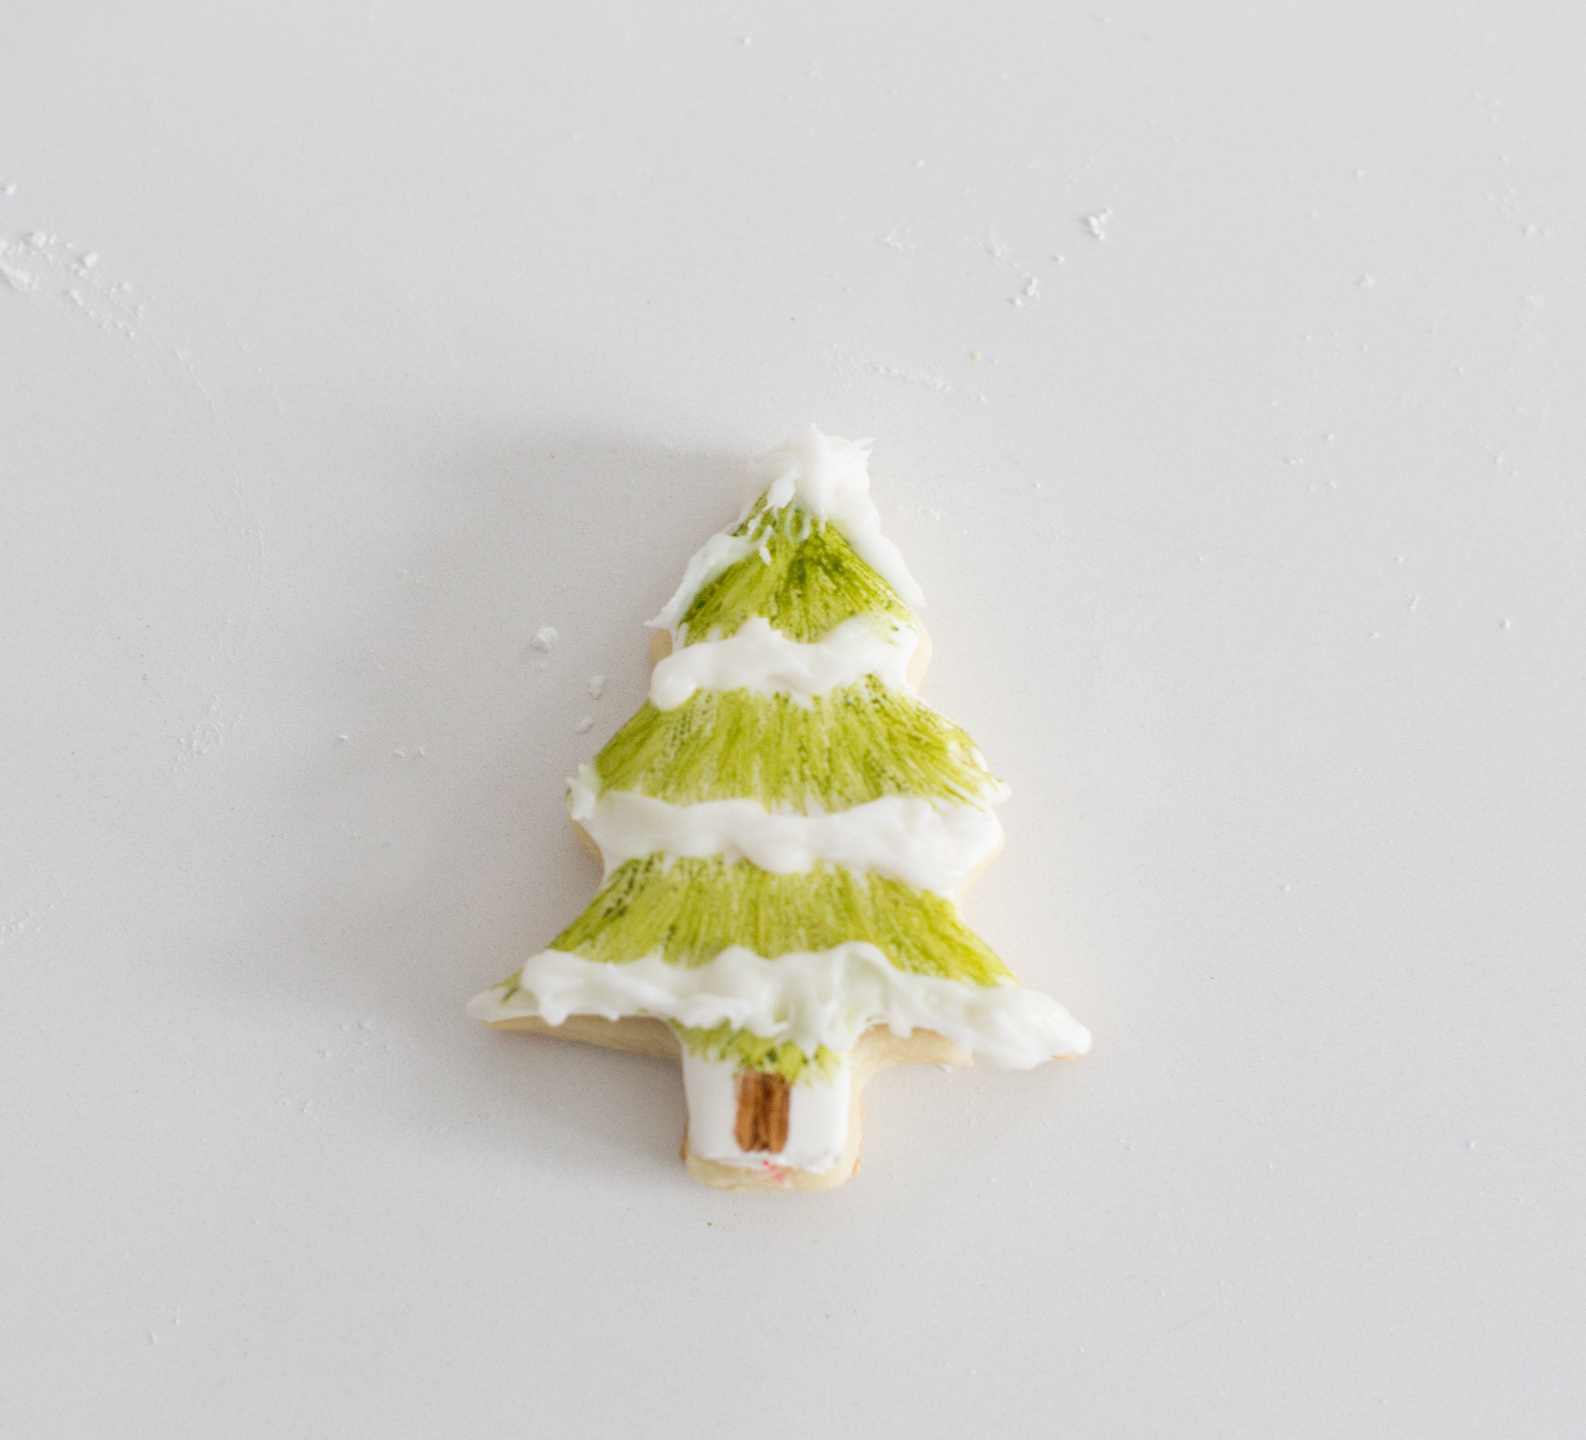 Painted Christmas Sugar Cookies – Cookie exchange party